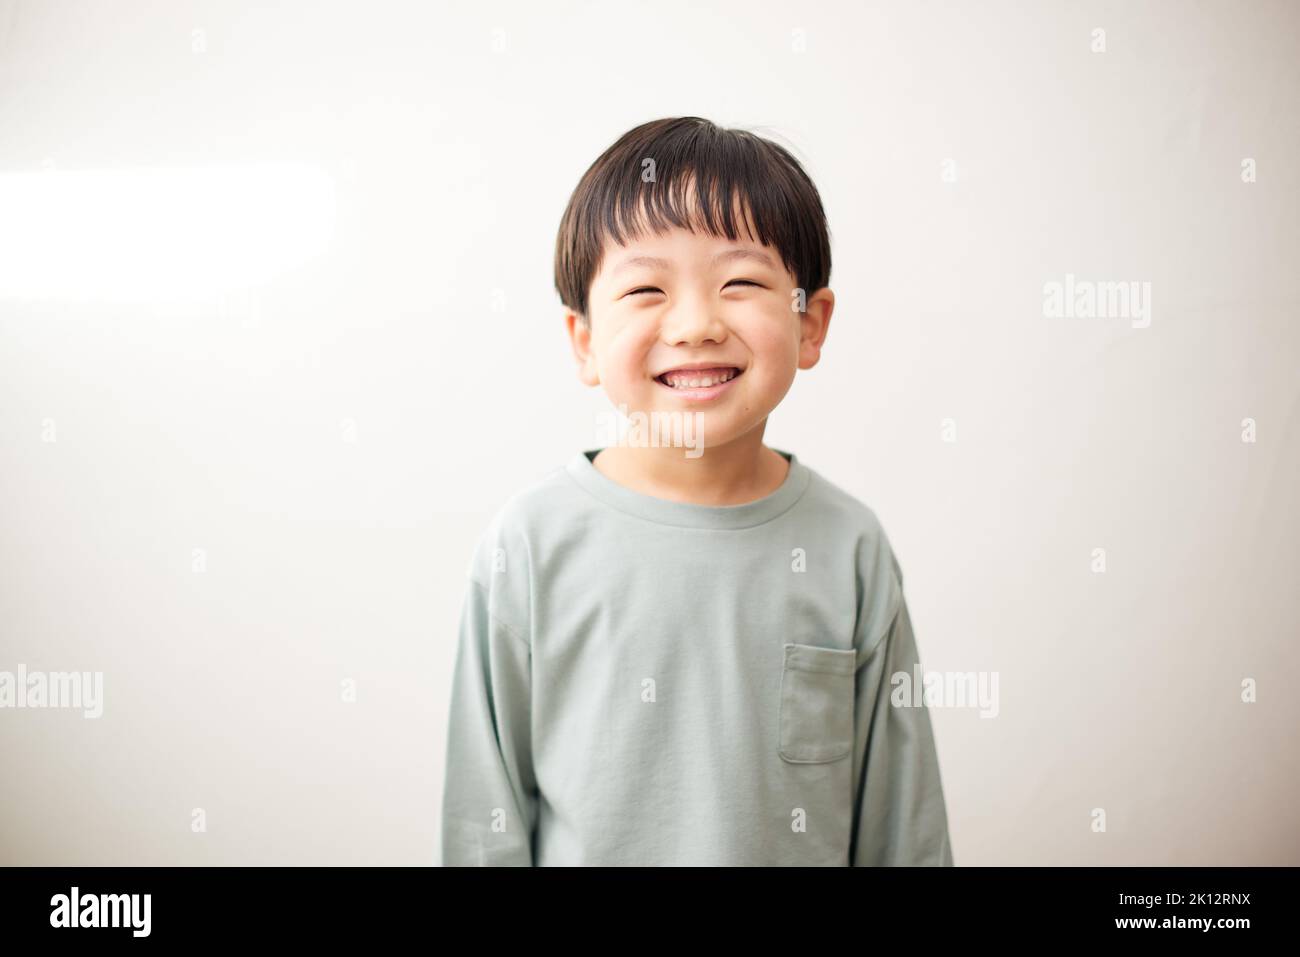 Japanese kid portrait Stock Photo